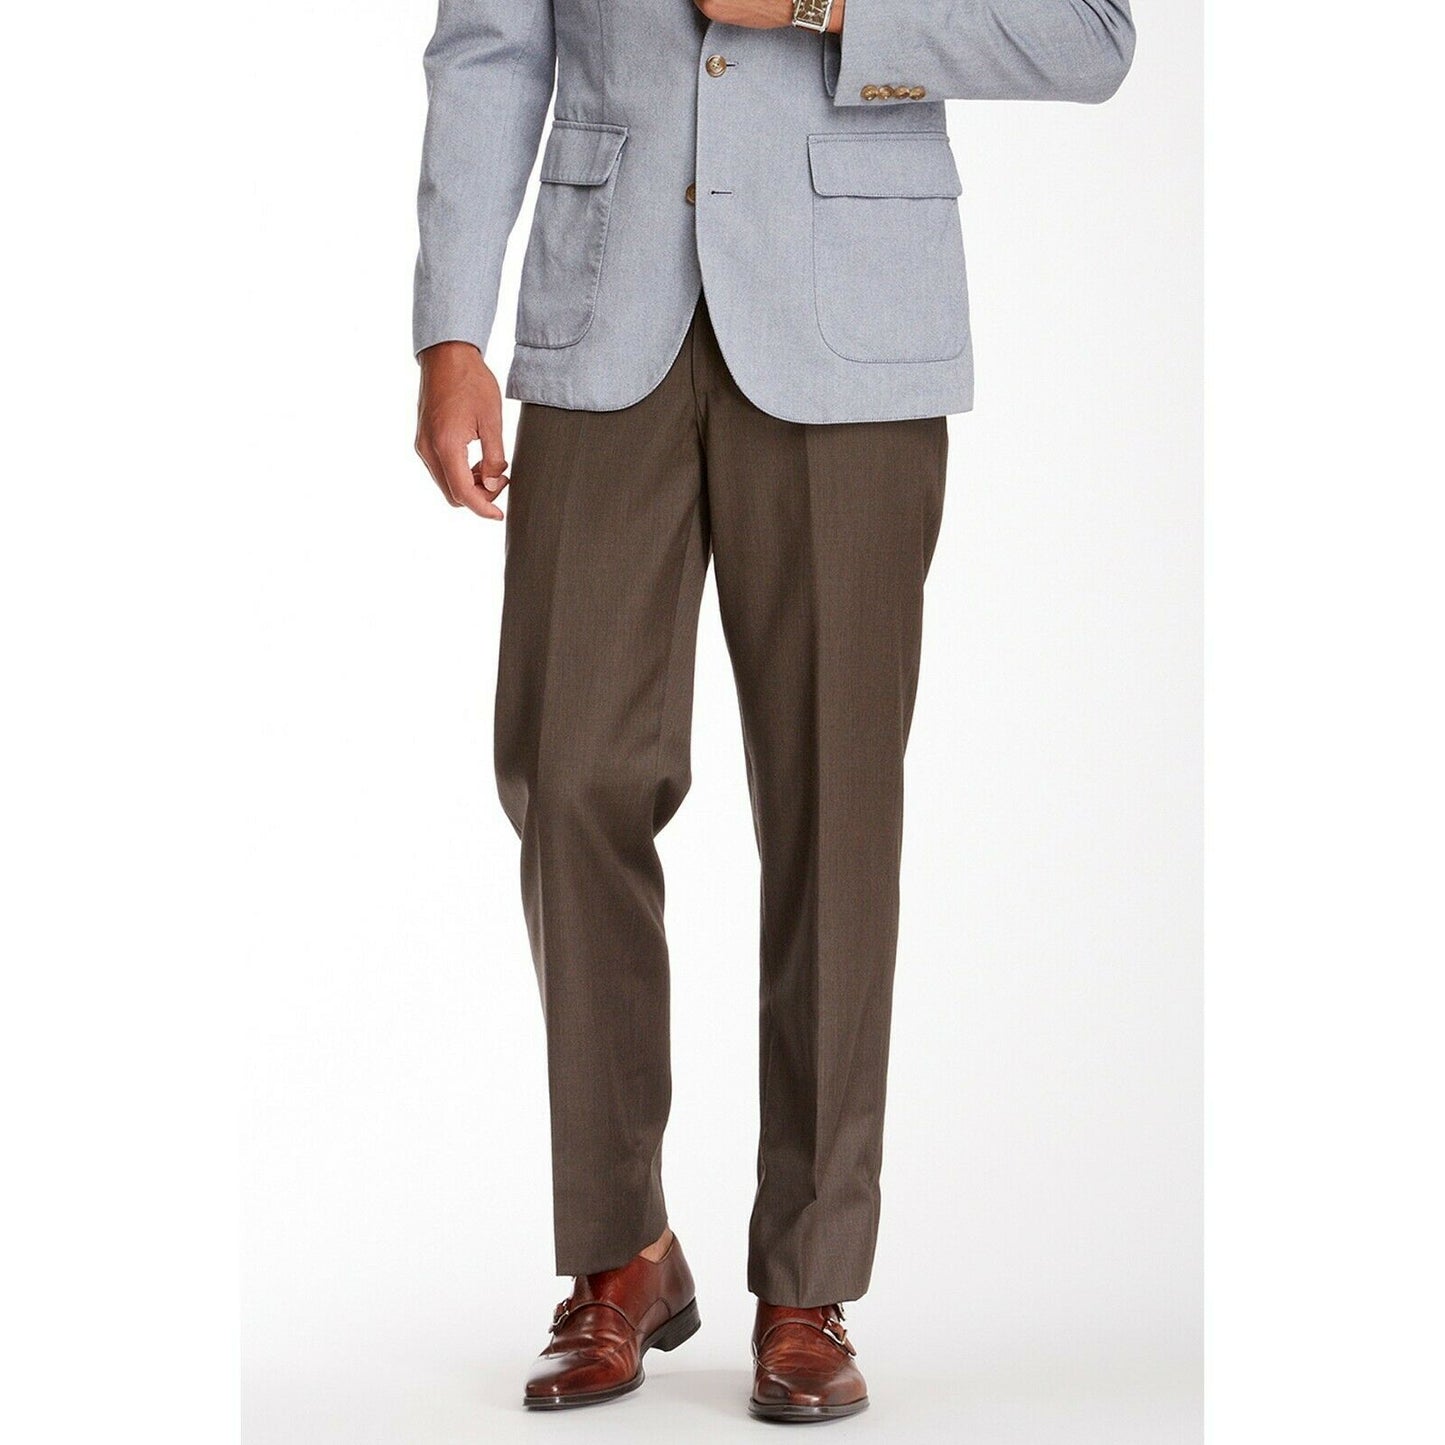 Ike Behar Mens Tan Wool Flat Front Dress Suit Slacks Pants 38 NWT